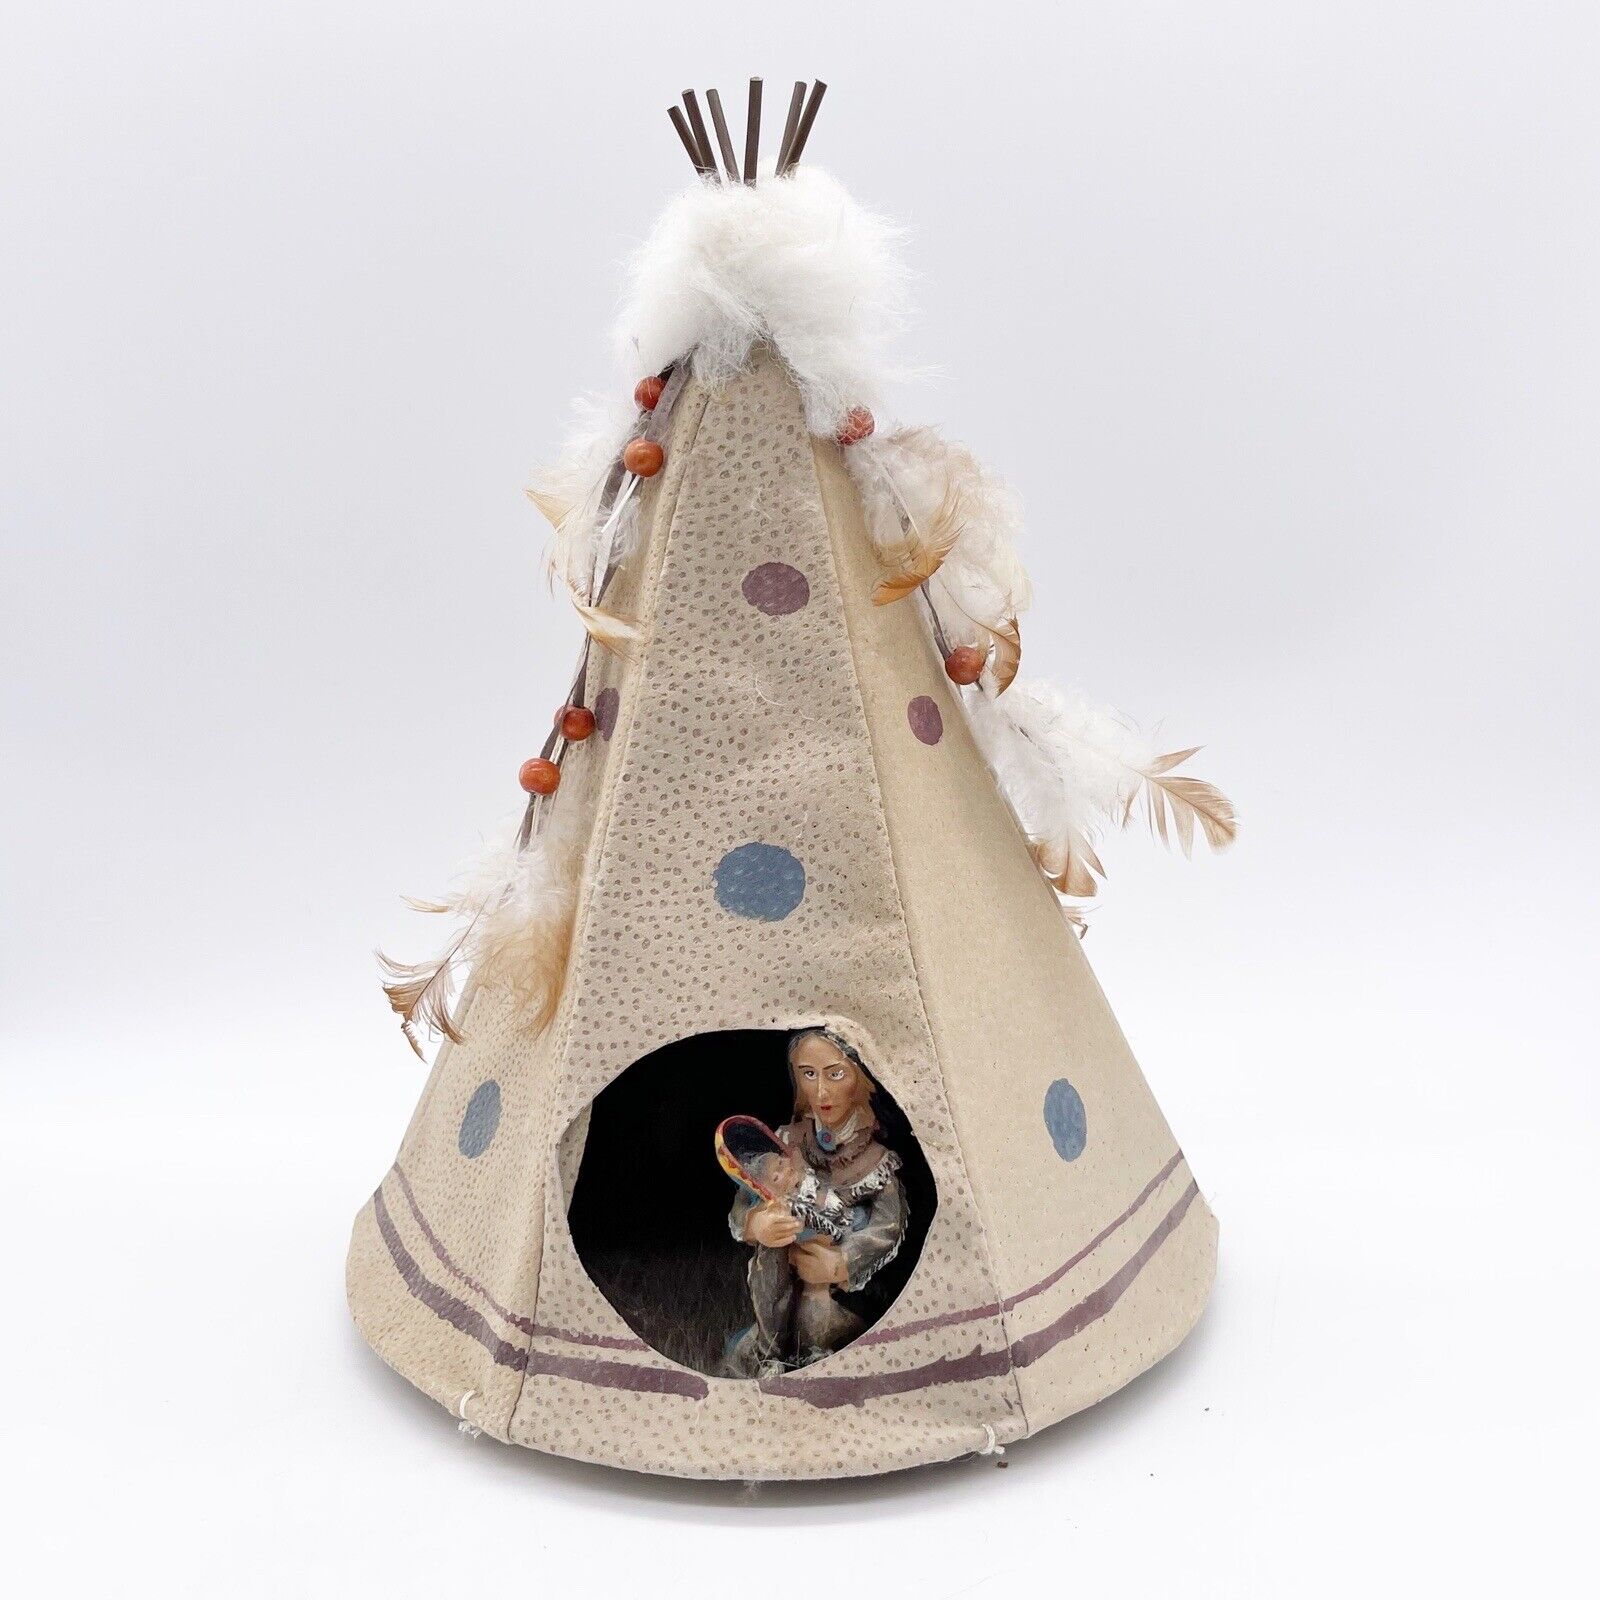 Vintage Detailed TeePee Native American Tent Canvas Model Feathers bead Handmade